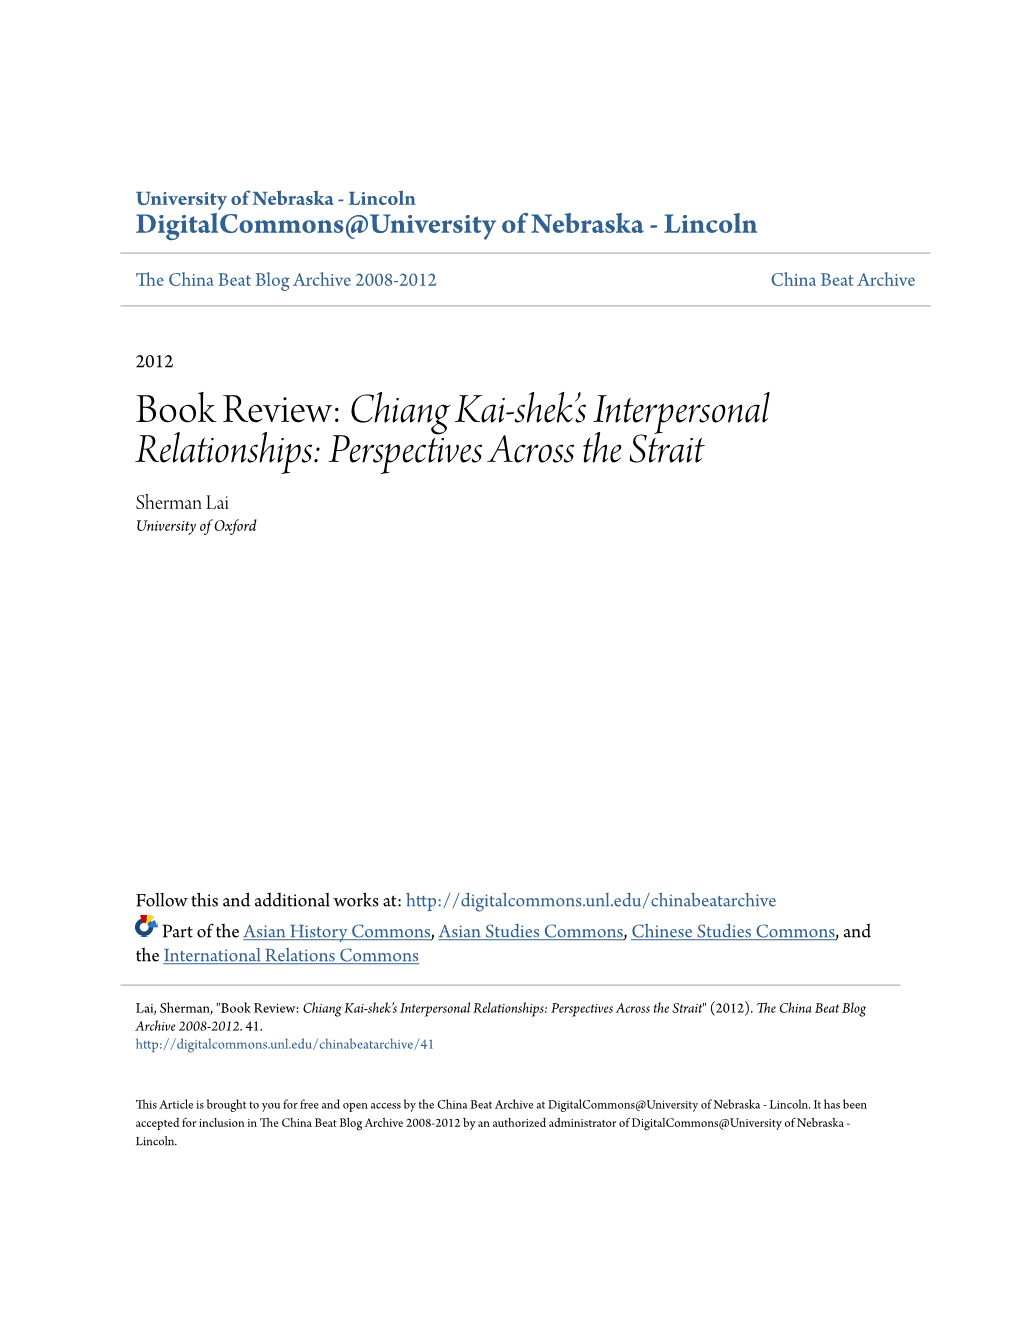 Book Review: Chiang Kai-Shek's Interpersonal Relationships